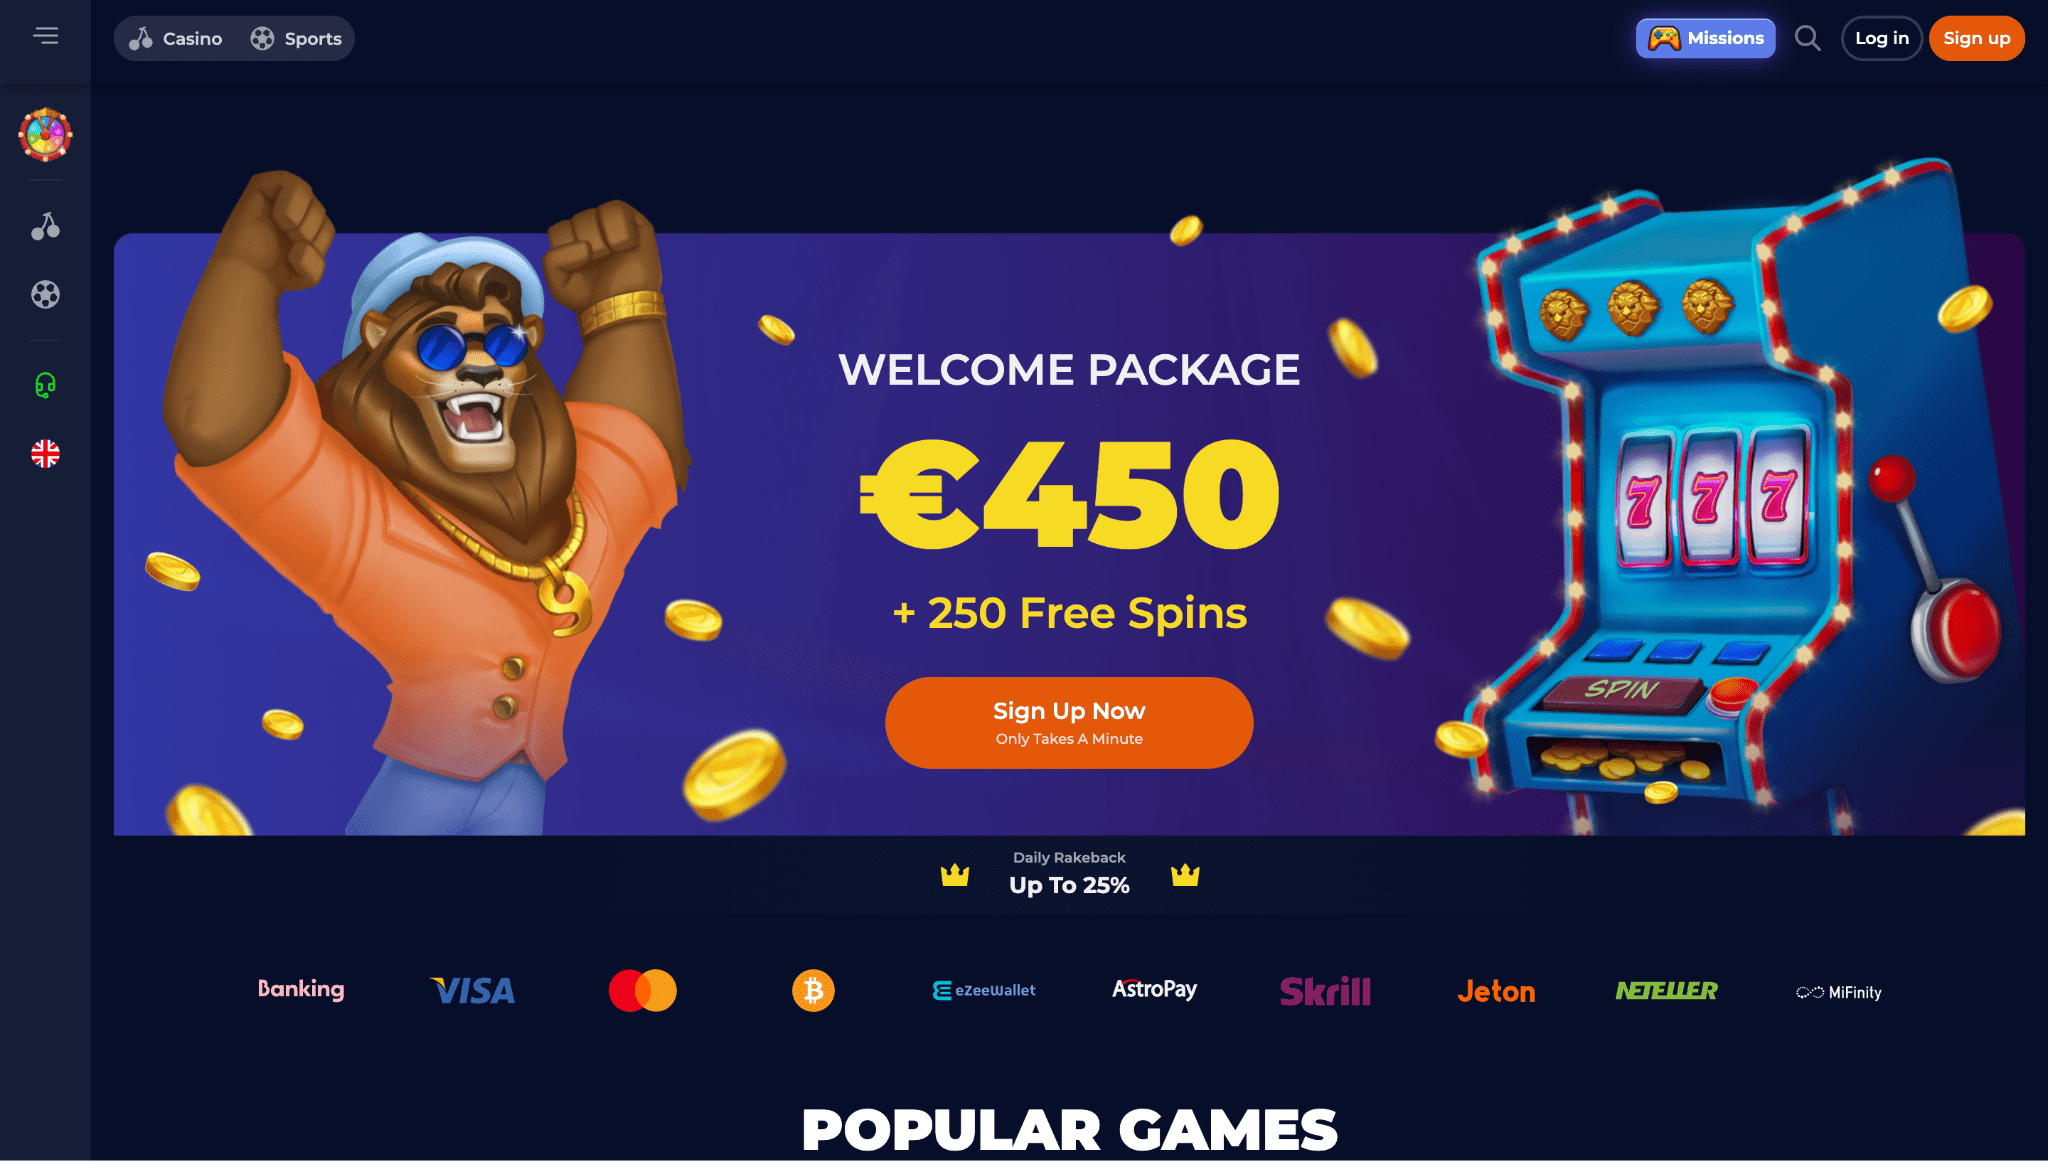 Screenshot of Nine casino's landing page